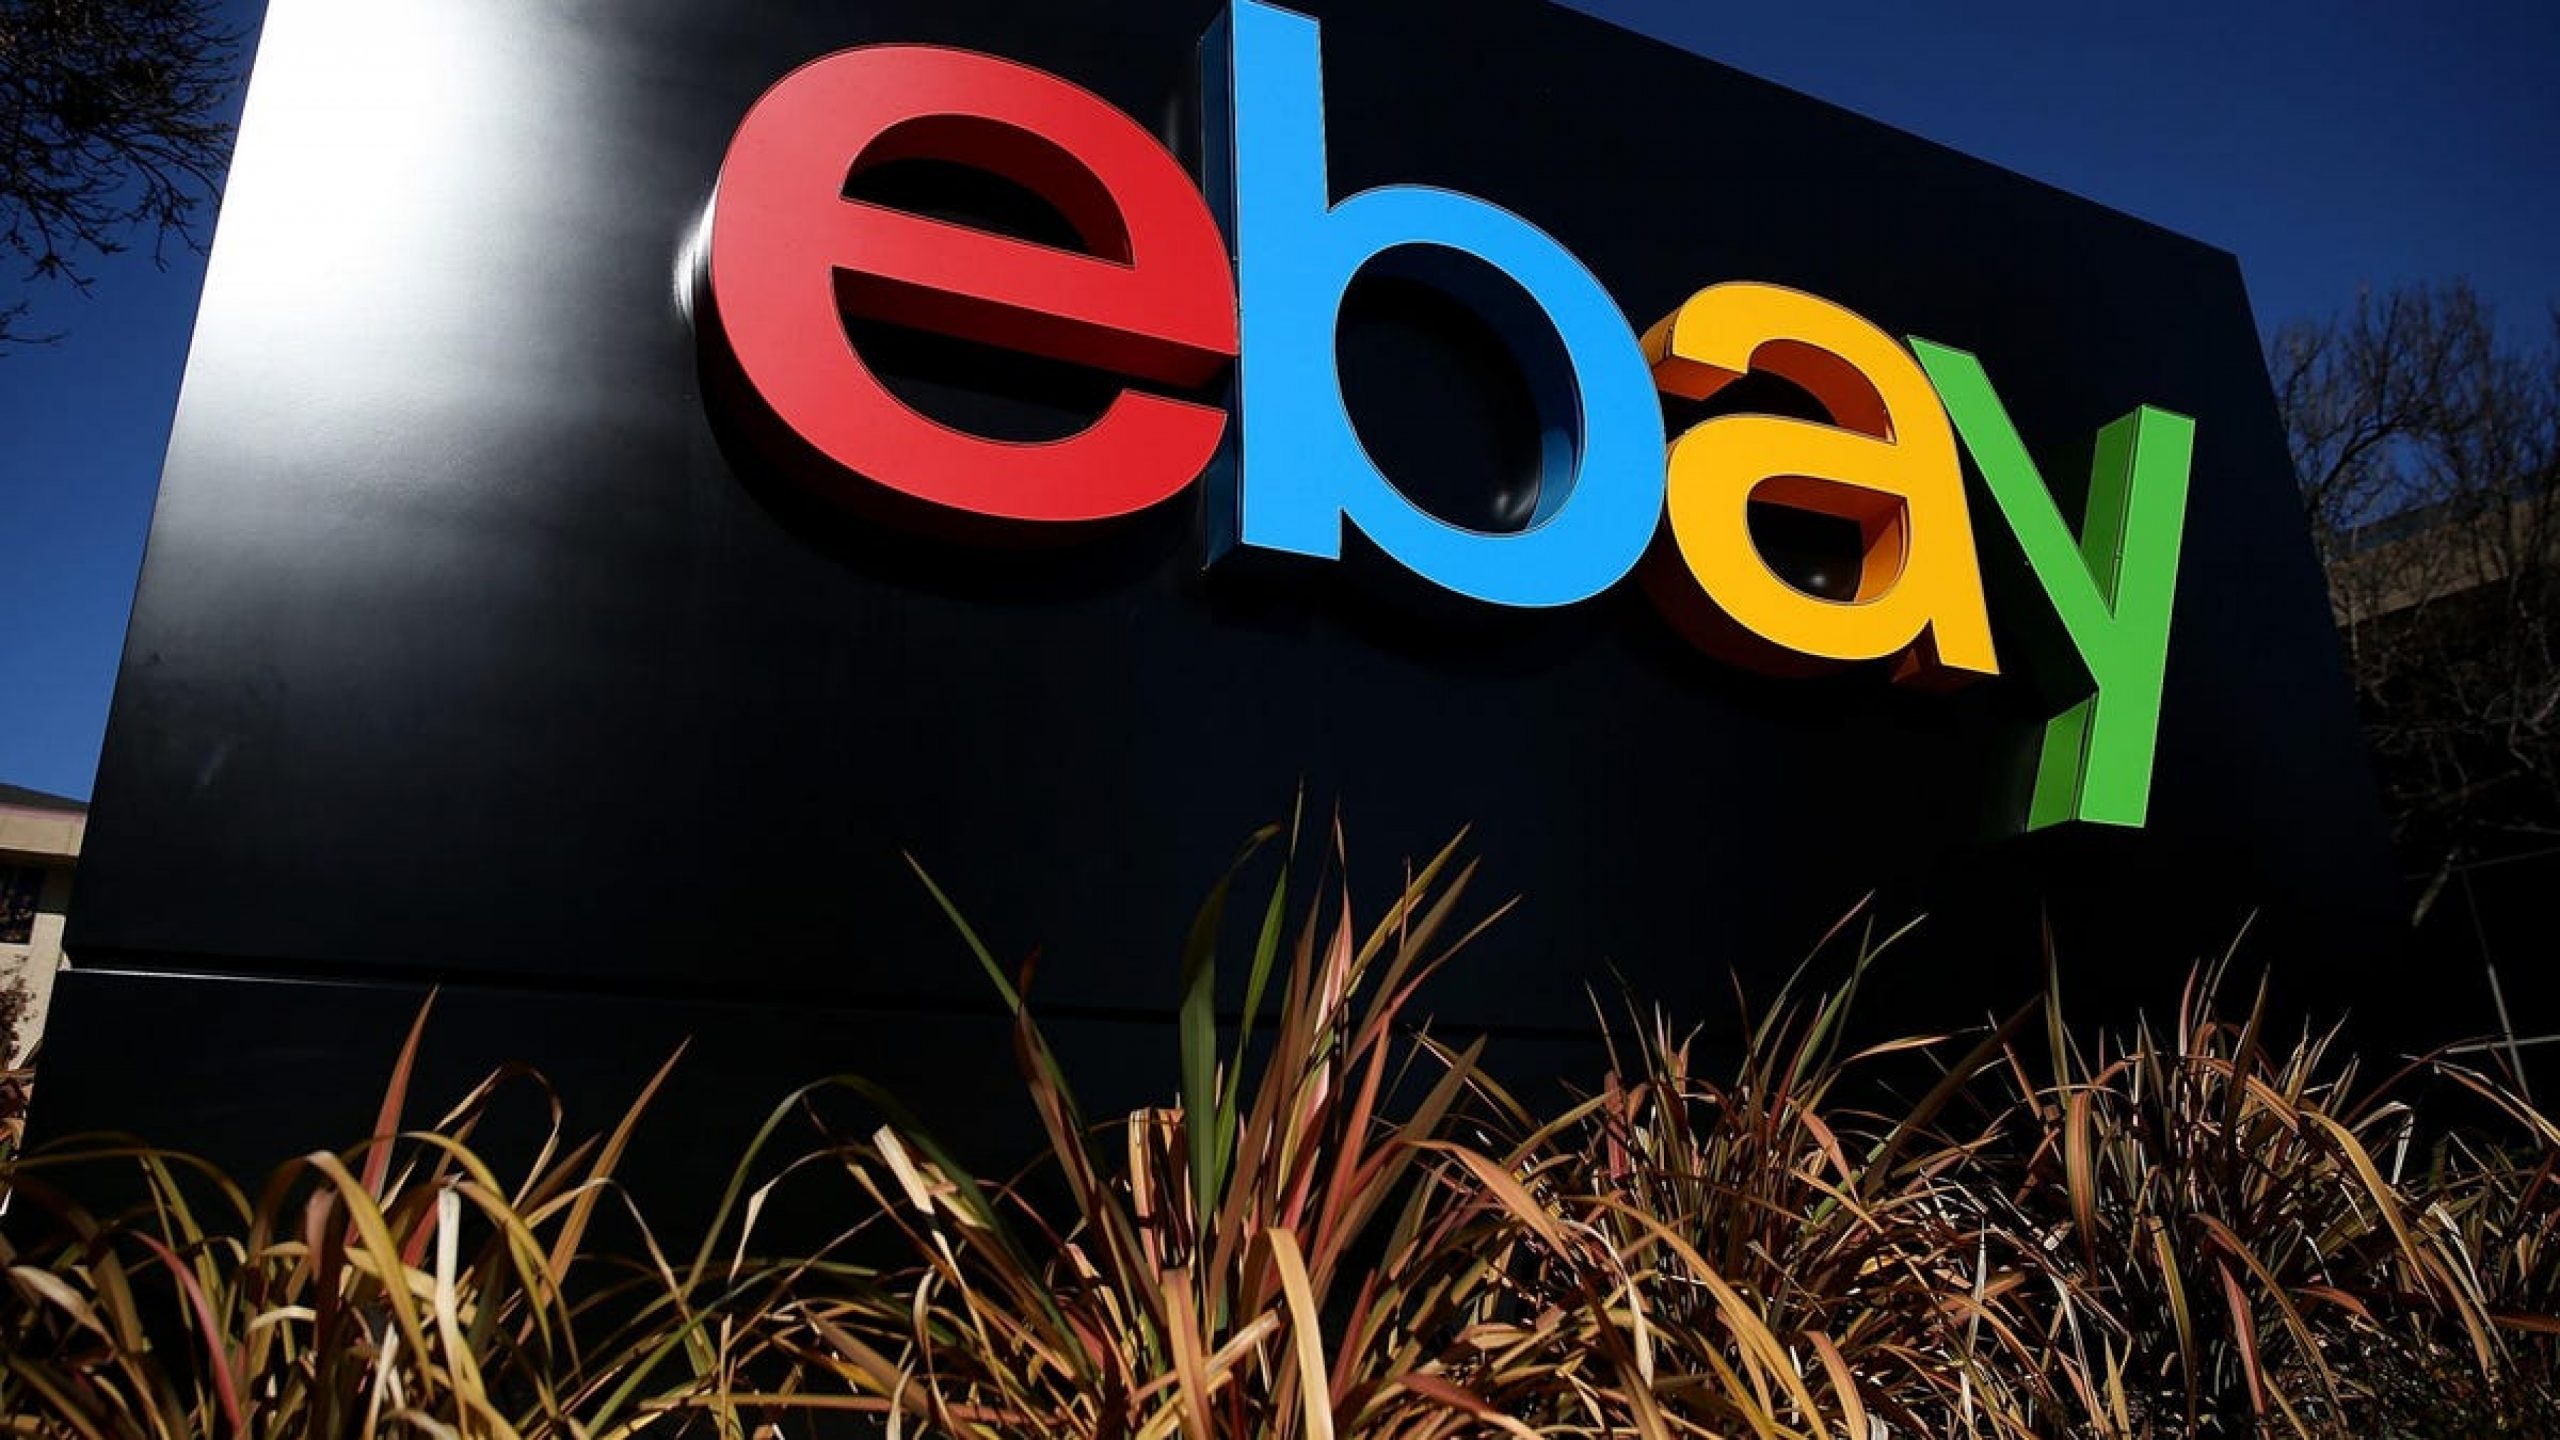 Former eBay Manager Caught In Deranged Cyberstalking Scandal Gets 18 Months in Prison